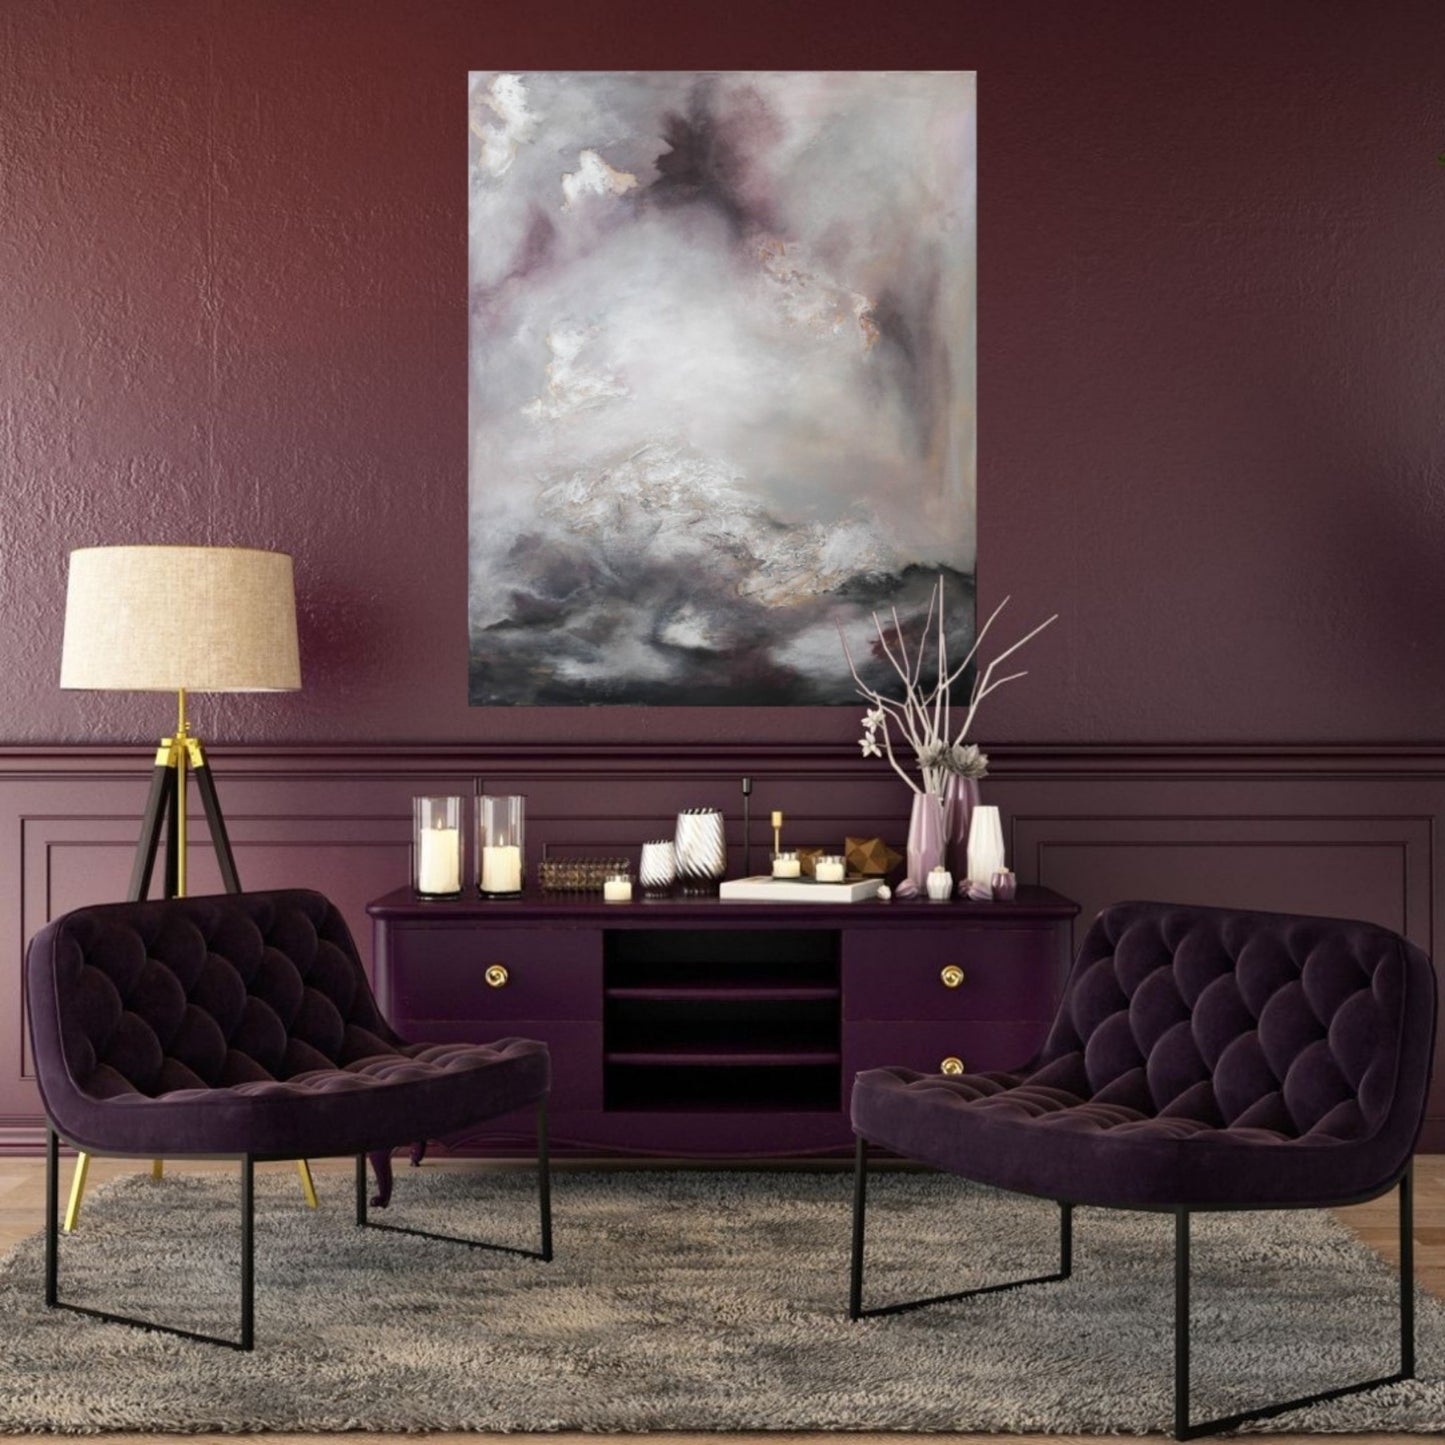 Large high end artwork in the luxury dark purple interior design.